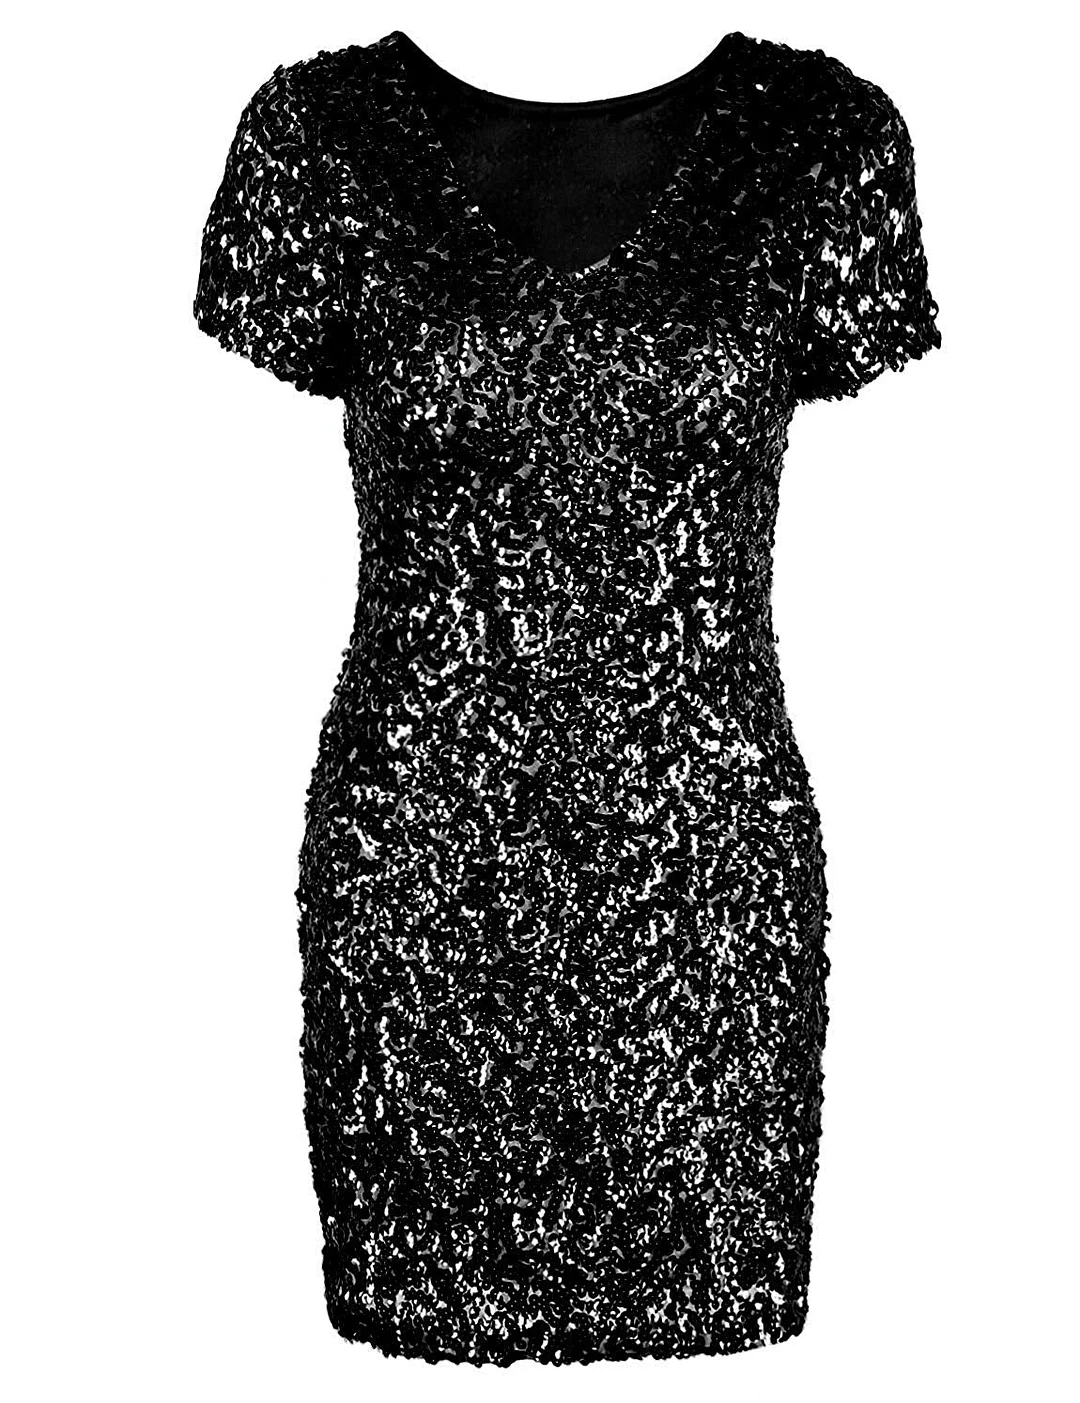 Women's Sparkly nightout dress Sexy Deep V Neck Sequin Glitter Bodycon Stretchy Mini Party Dress